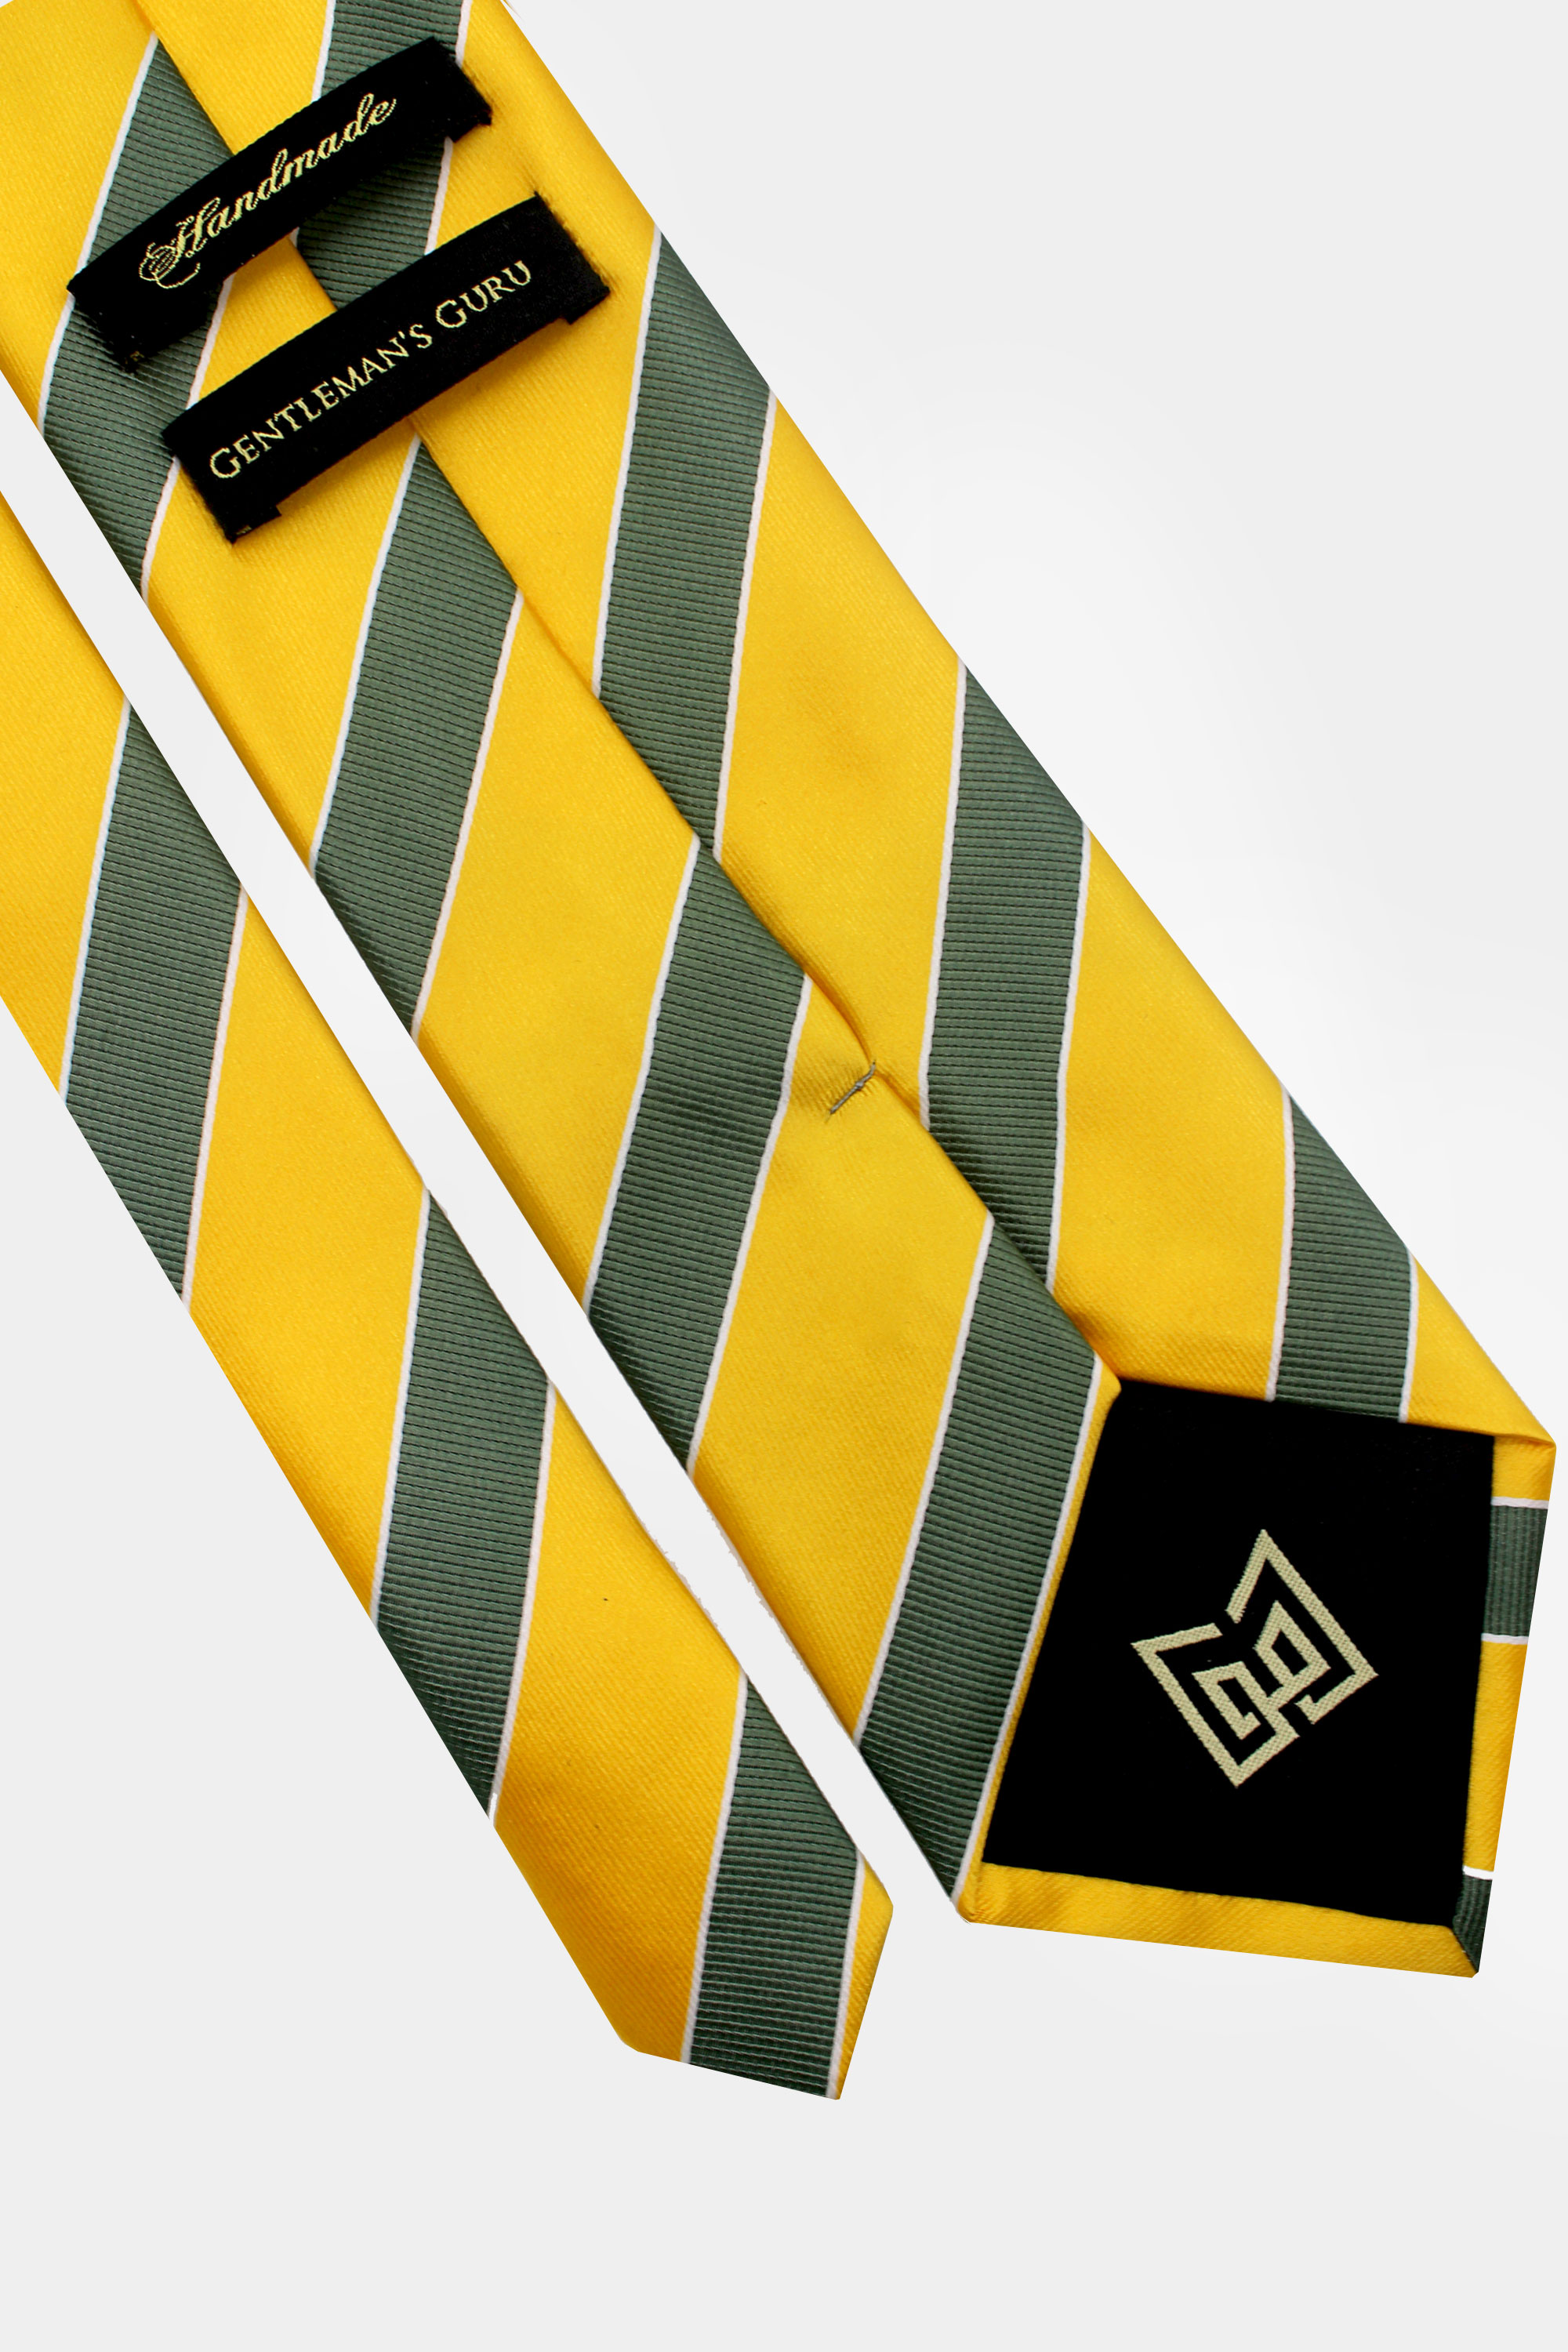 Gold-and-Green-Striped-Tie-from-Gentlemansguru.com